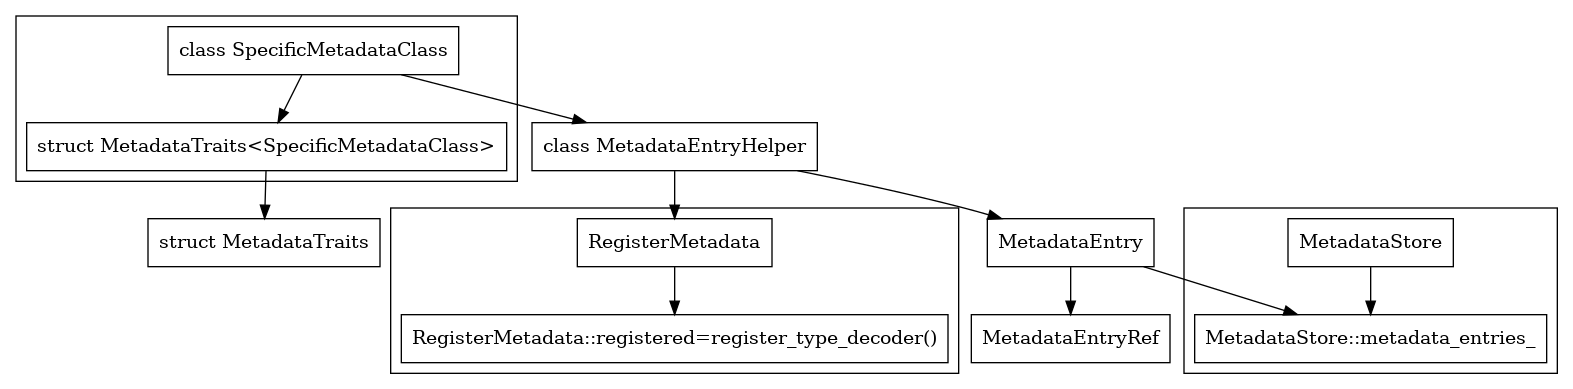 digraph {
   subgraph cluster_SpecificMetadataClass {
       SpecificMetadataClass [
           label="class SpecificMetadataClass",
           shape="rectangle"];
       SpecificMetadataClassType [
           label="struct MetadataTraits<SpecificMetadataClass>",
           shape="rectangle"
       ];

       SpecificMetadataClass -> SpecificMetadataClassType;
   }

   MetadataEntryHelper [
       label="class MetadataEntryHelper",
       shape="rectangle"];
   MetadataTraits [
       label="struct MetadataTraits",
       shape="rectangle"];

   SpecificMetadataClass -> MetadataEntryHelper;
   SpecificMetadataClassType -> MetadataTraits;

   MetadataEntry [
       label="MetadataEntry",
       shape="rectangle"];
   MetadataEntryRef [
       label="MetadataEntryRef",
       shape="rectangle"];

   MetadataEntry -> MetadataEntryRef;

   subgraph cluster_RegisterMetadata {
       RegisterMetadata [
           label="RegisterMetadata",
           shape="rectangle"];
       RegisterMetadata_Decoder [
           label="RegisterMetadata::registered=register_type_decoder()",
           shape="rectangle"];
       RegisterMetadata->RegisterMetadata_Decoder;
   };

   MetadataEntryHelper -> MetadataEntry;
   MetadataEntryHelper -> RegisterMetadata;

   subgraph cluster_MetadataStore {
       MetadataStore [
           label="MetadataStore",
           shape="rectangle"];
       MetadataStore_Entries [
           label="MetadataStore::metadata_entries_",
           shape="rectangle"];
       MetadataStore->MetadataStore_Entries;
   };

   MetadataEntry -> MetadataStore_Entries;
}